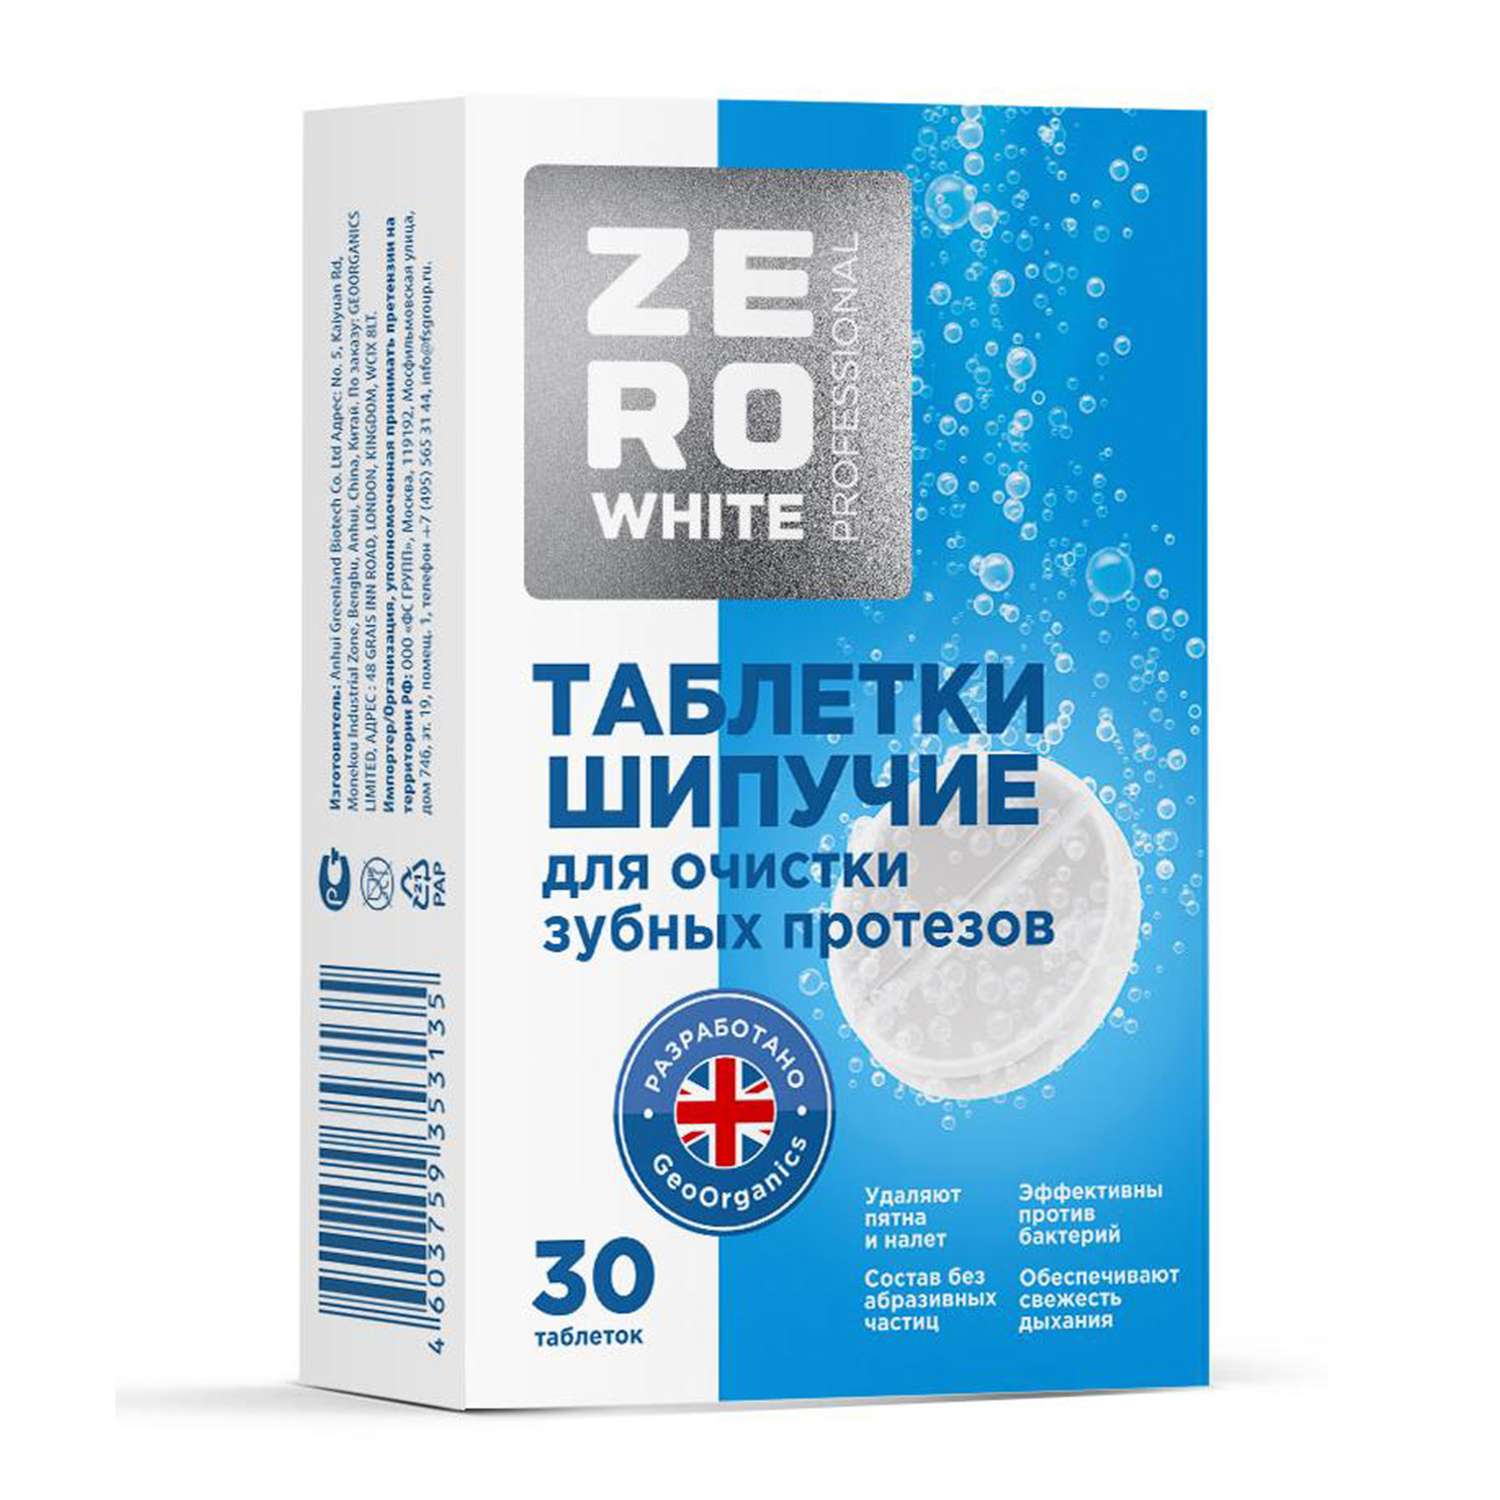 Таблетки ZE RO WHITE Таблетки для очистки зубных протезов шипучие 30 штук - фото 1